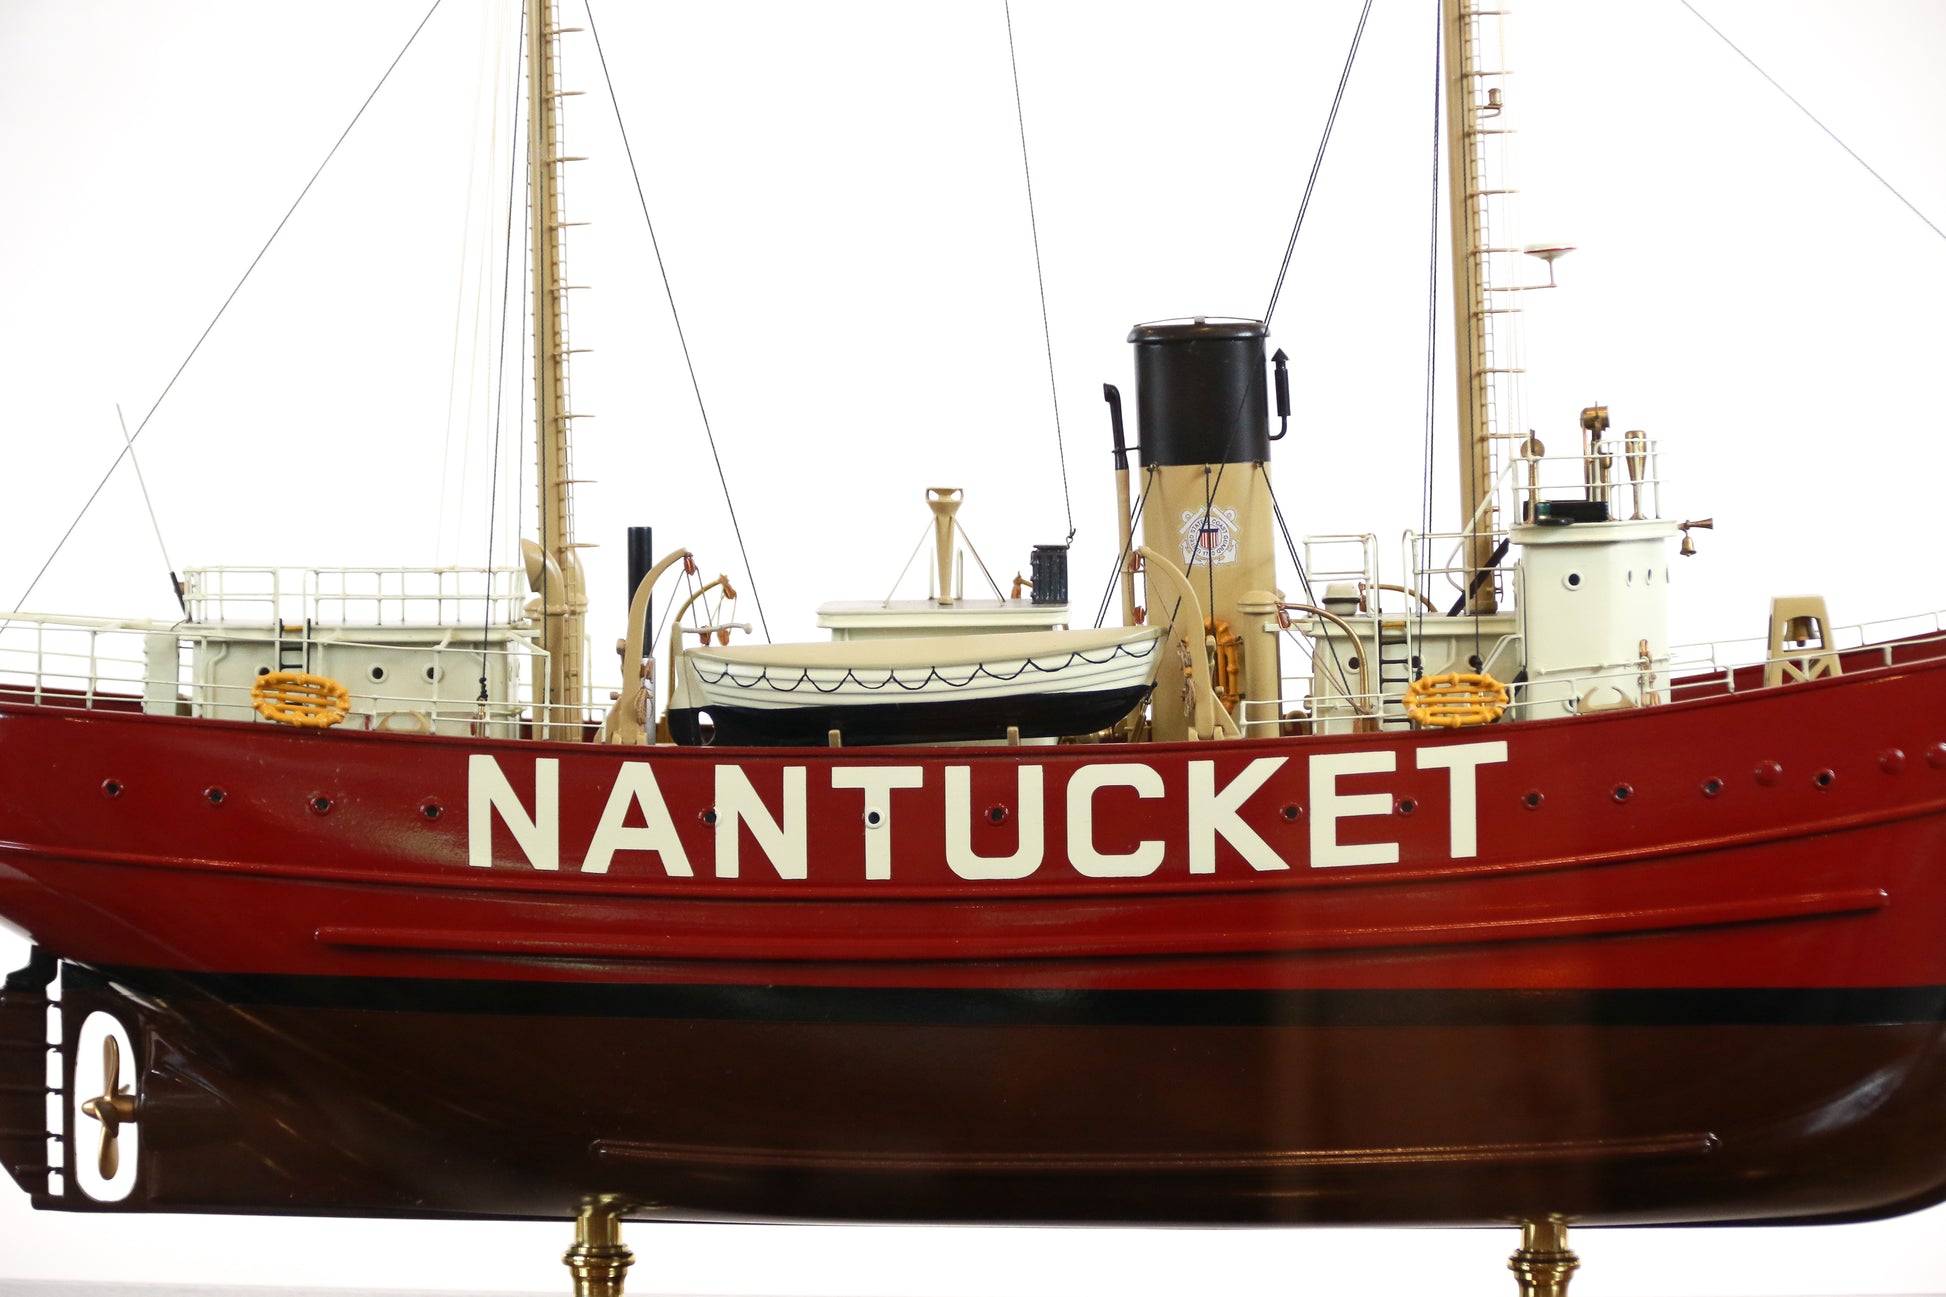 Nantucket Lightship LV-112 [07/23/22]